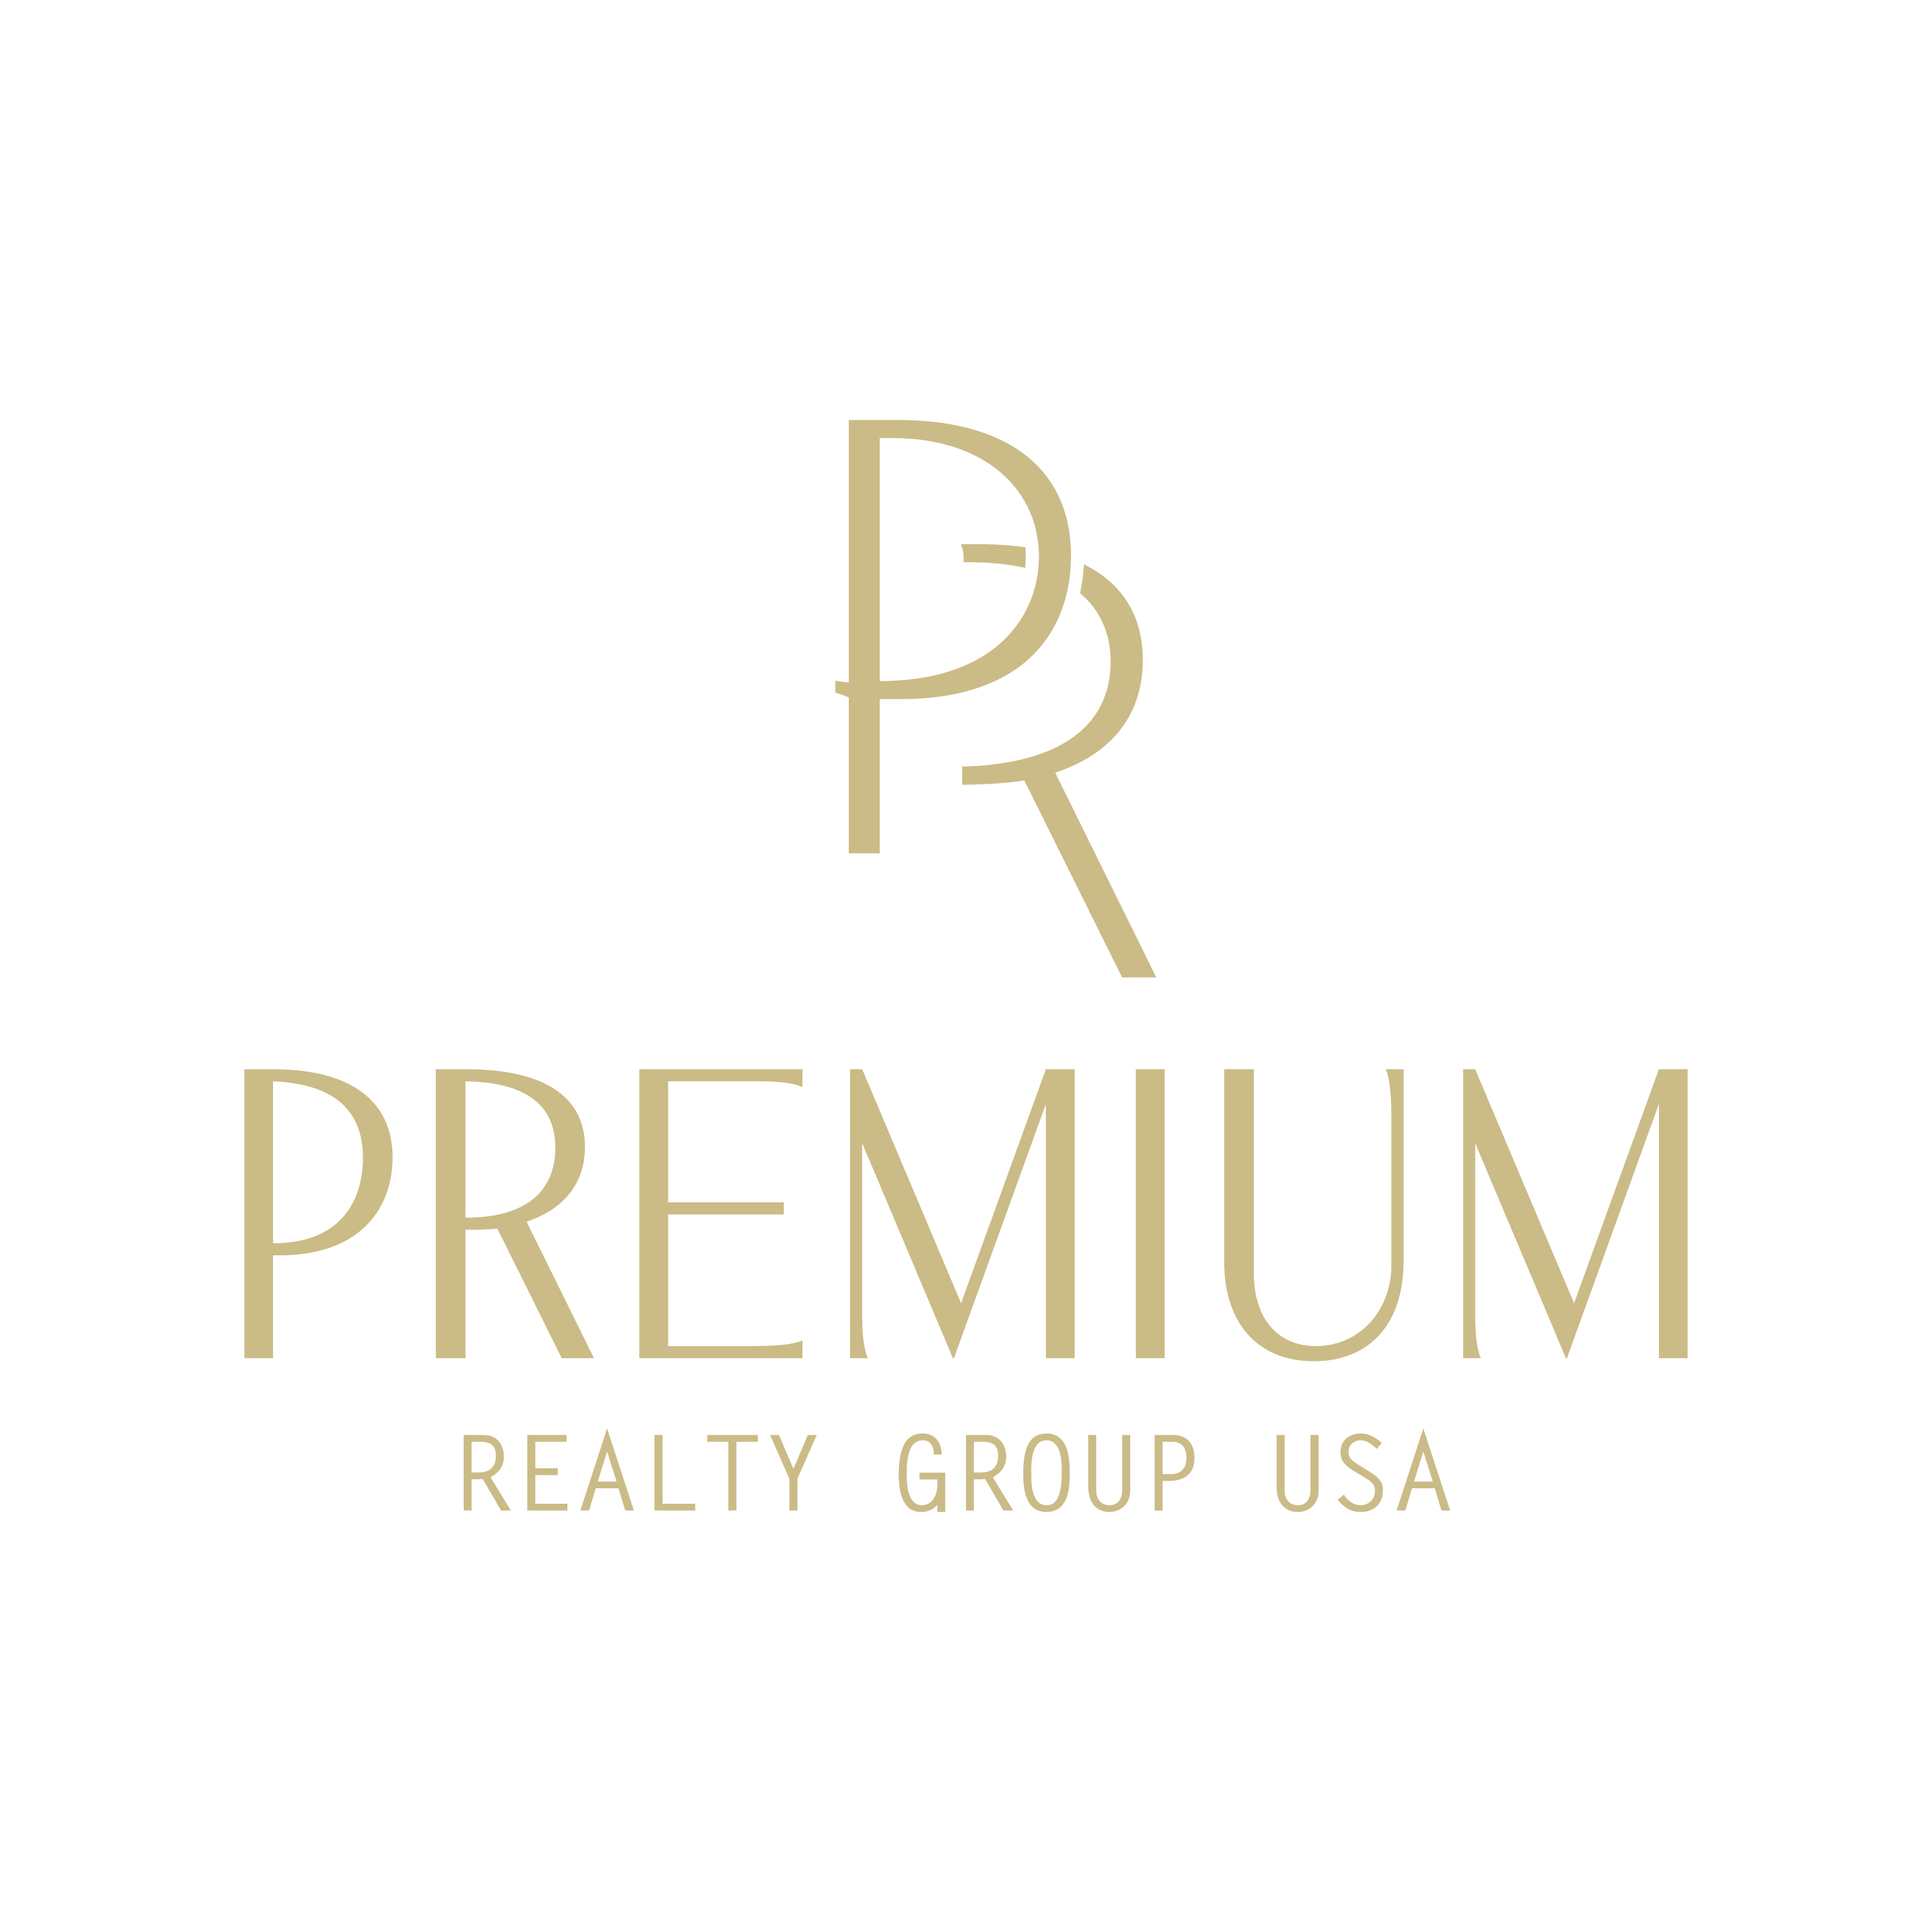 Premium Realty Group USA